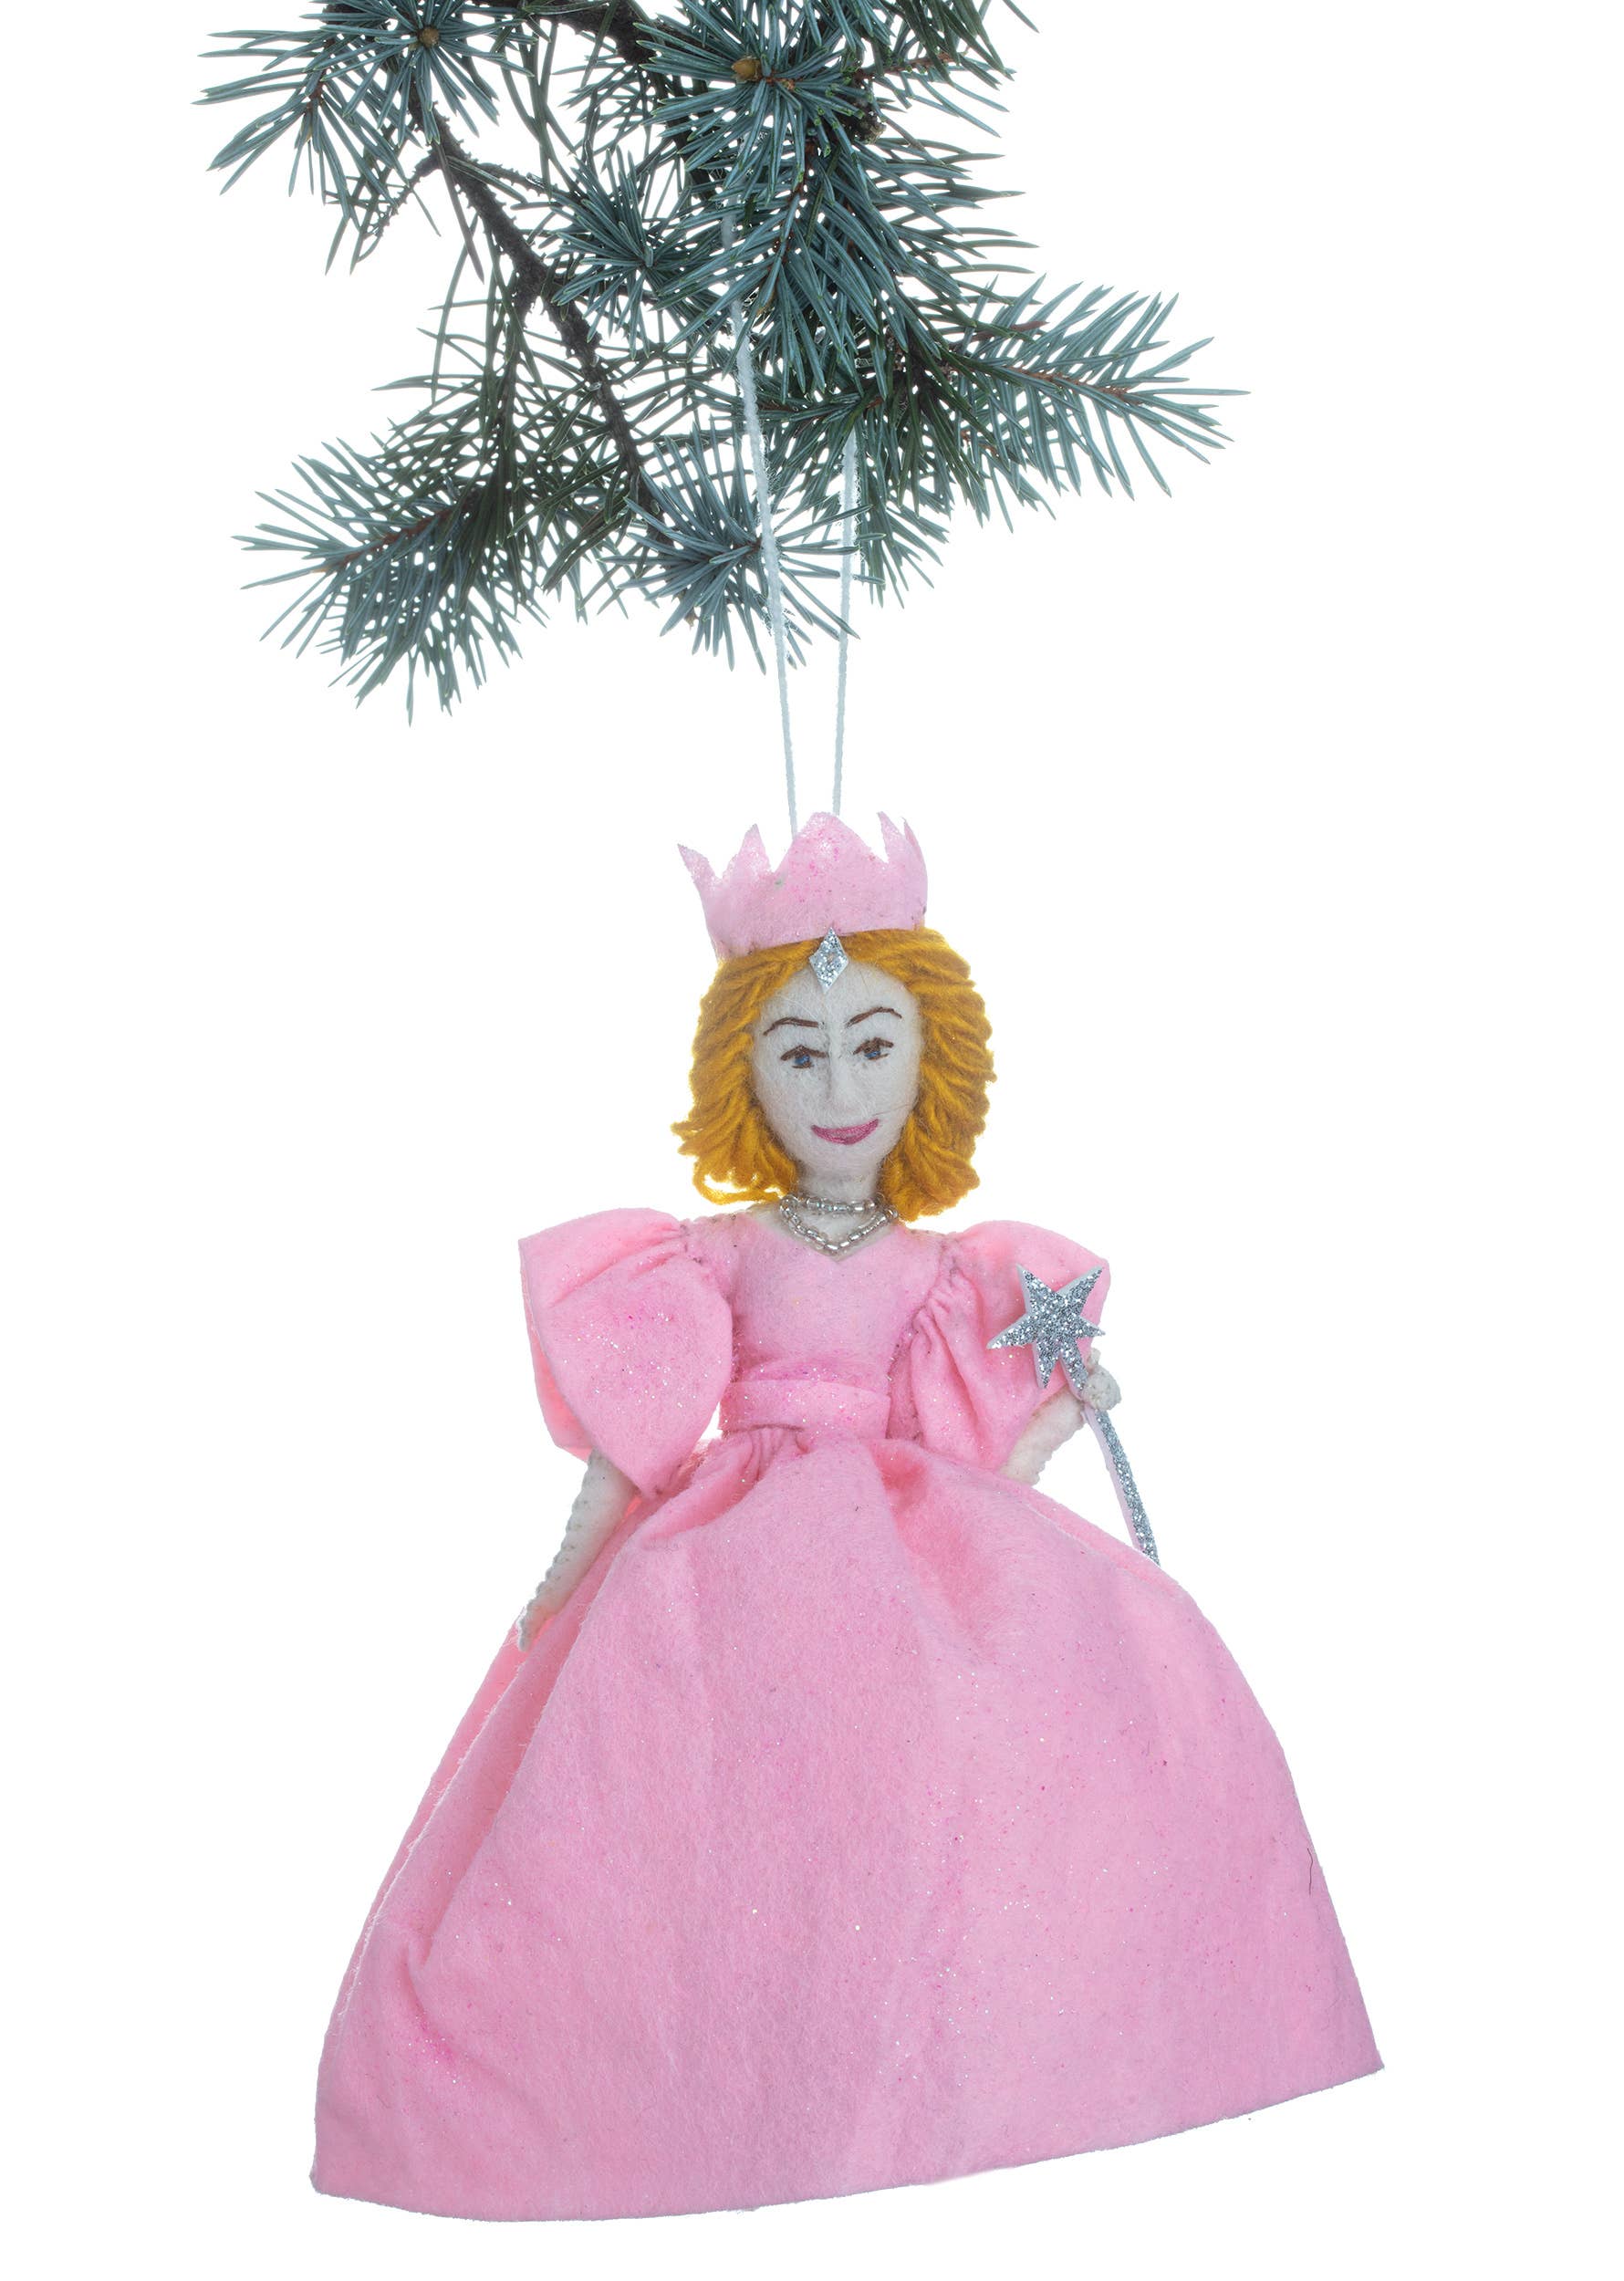 Glinda the Good Witch Ornament